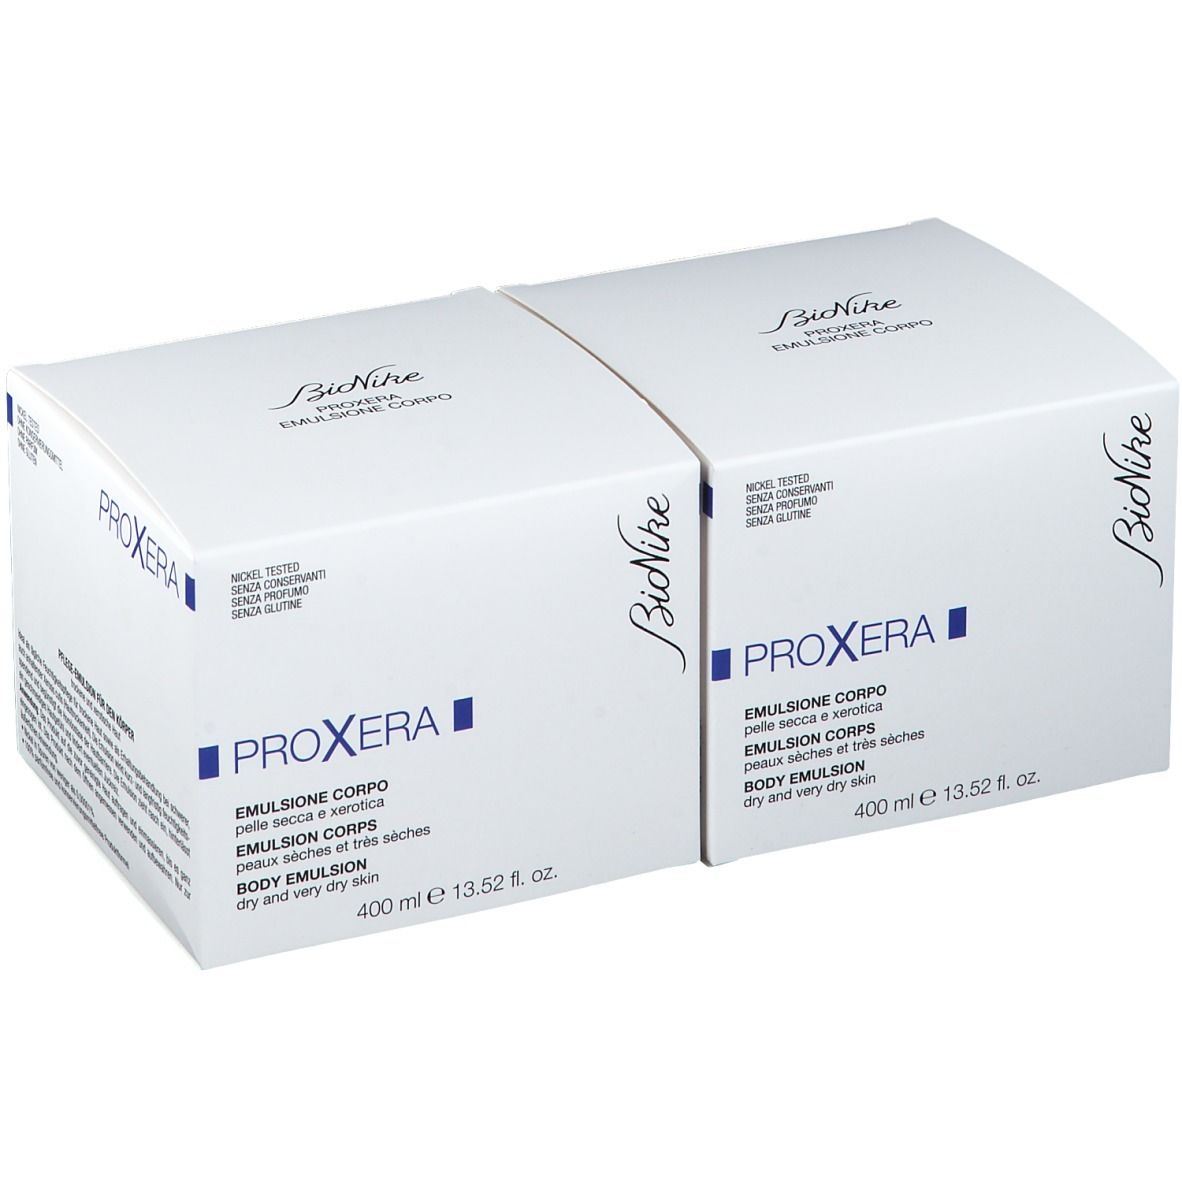 BioNike PROXERA Emulsione Corpo Duo Pack